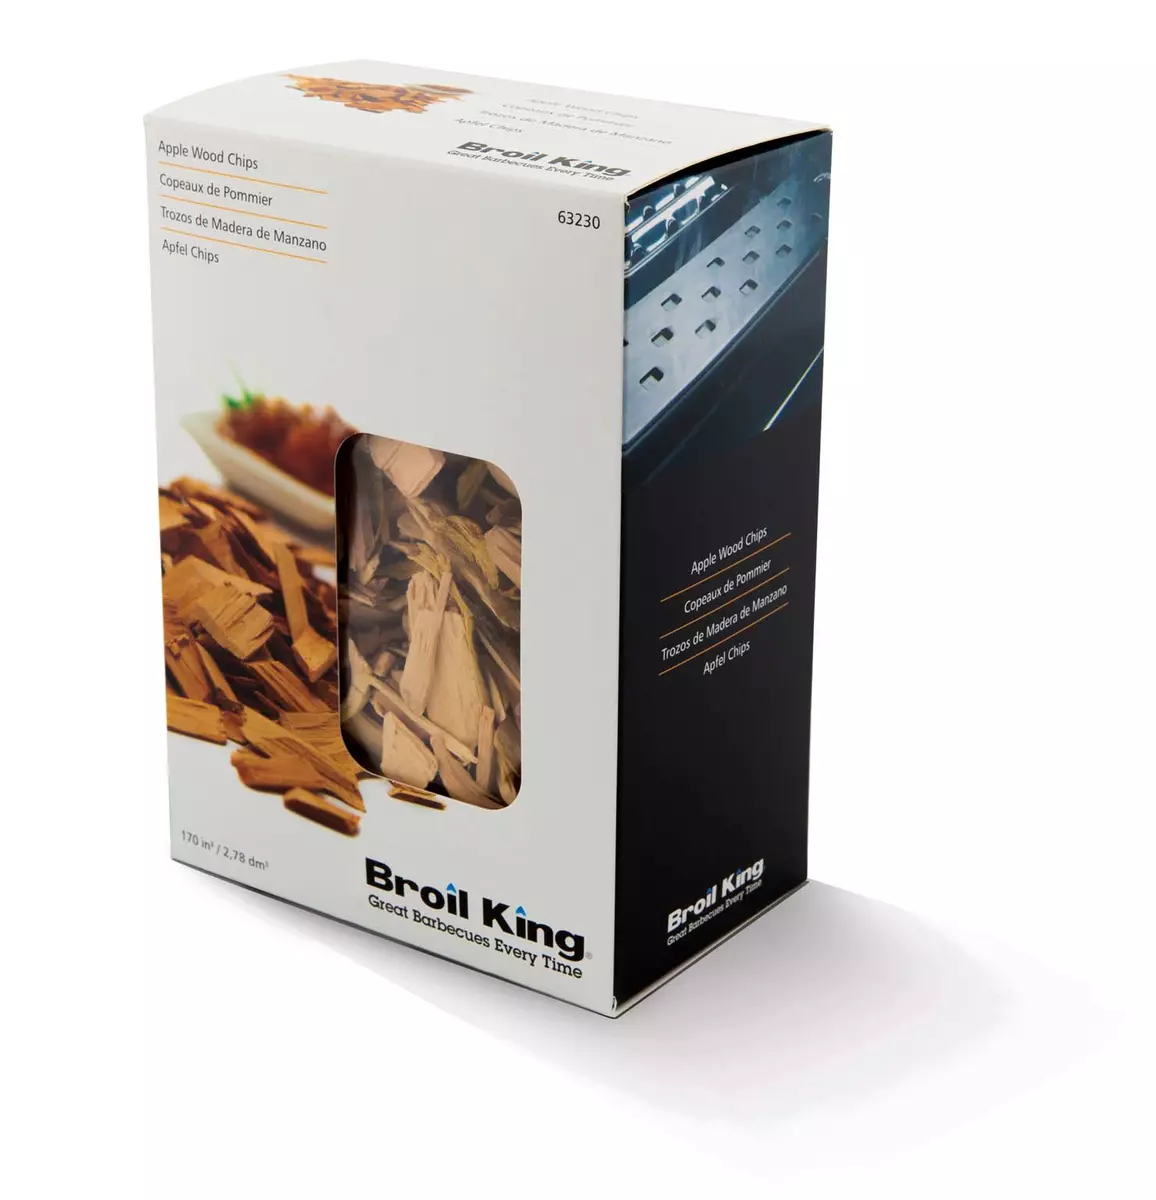 Broil King Apple Wood Chips - image 2